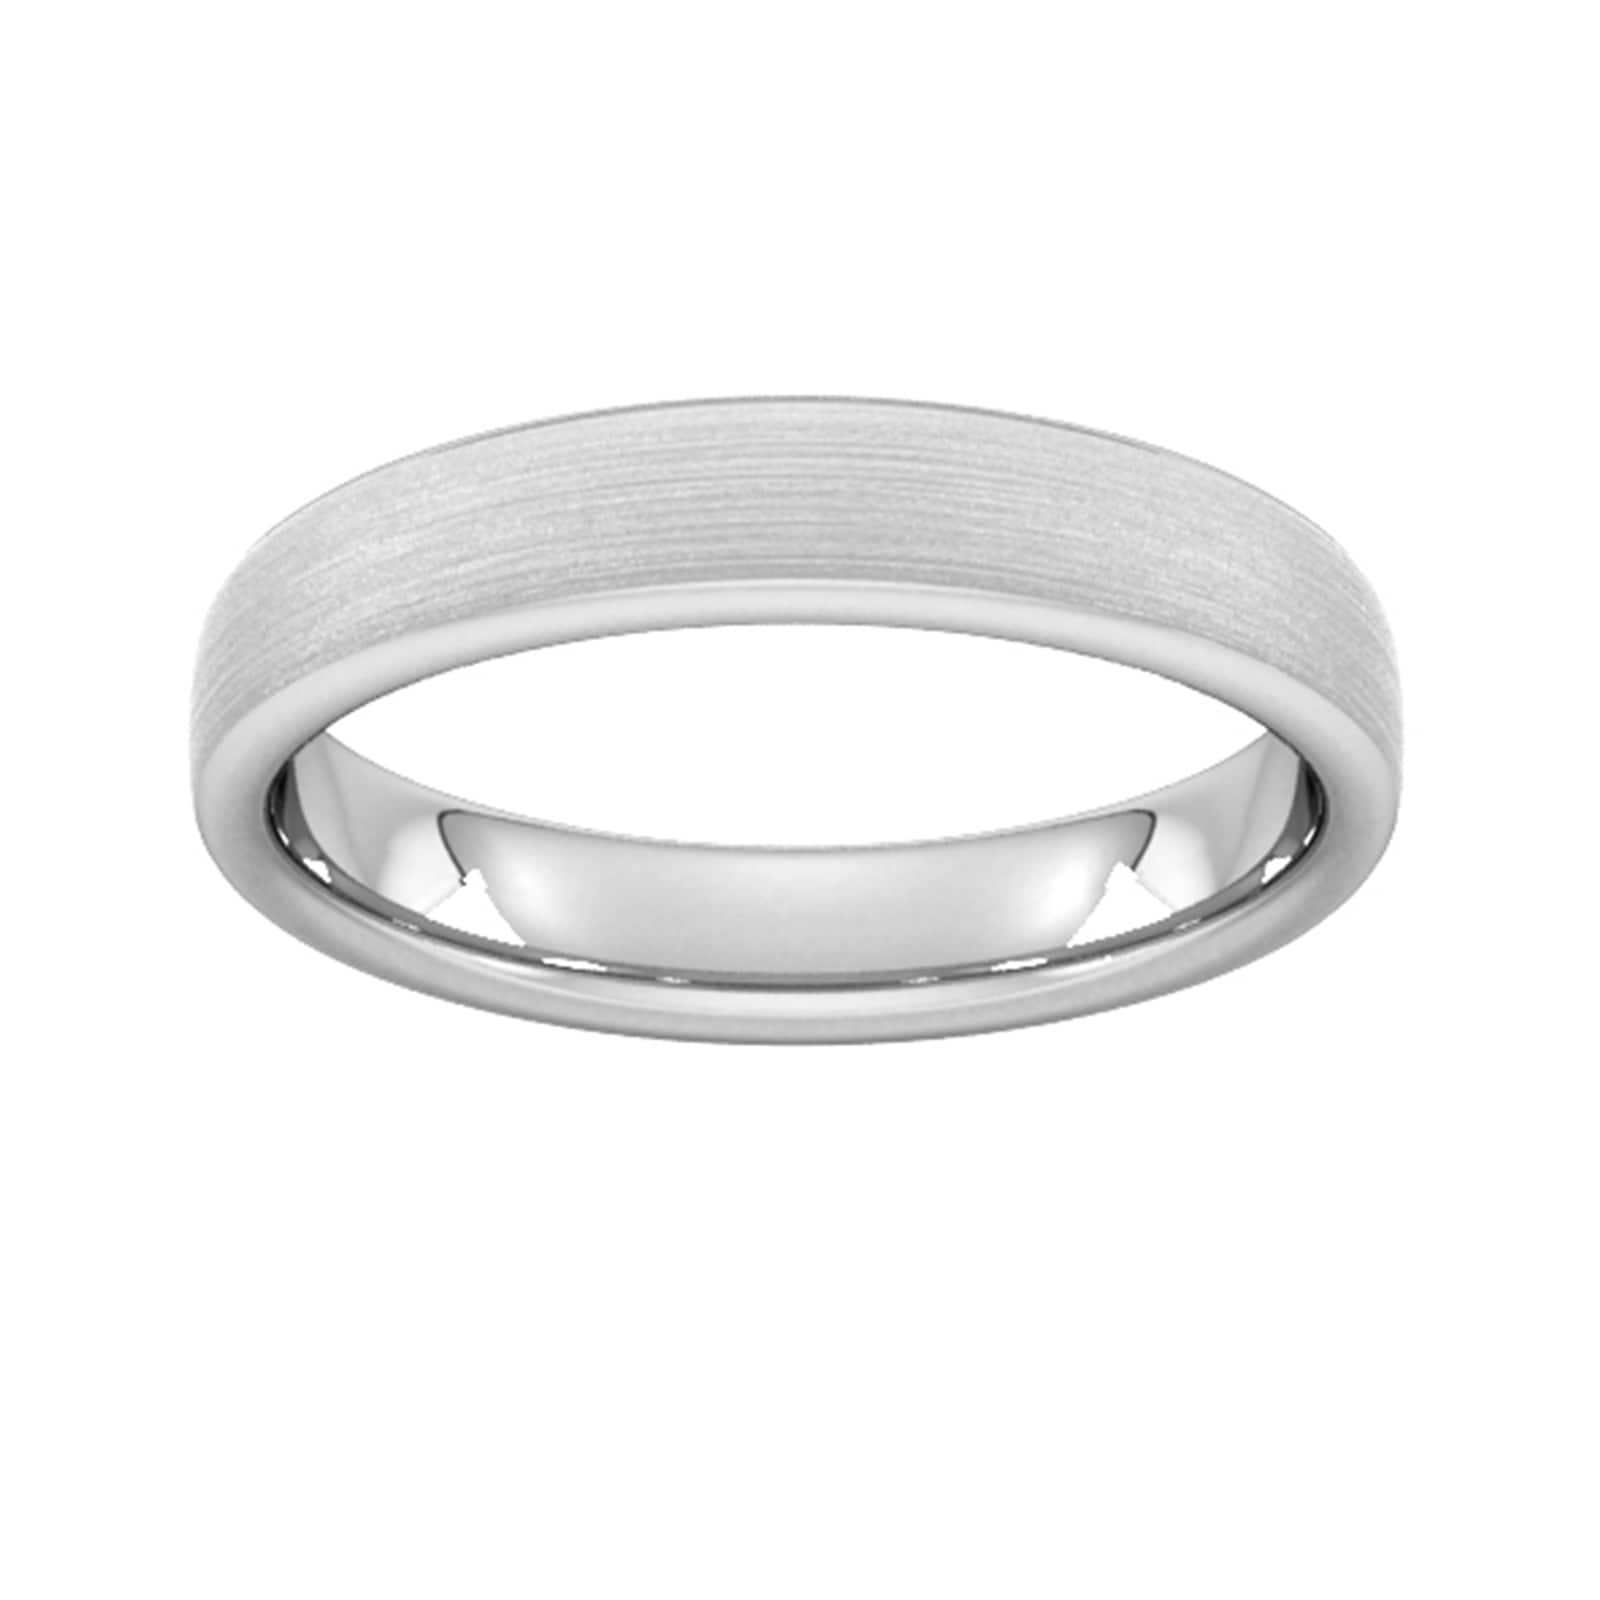 4mm Slight Court Standard Matt Finished Wedding Ring In 9 Carat White Gold - Ring Size O